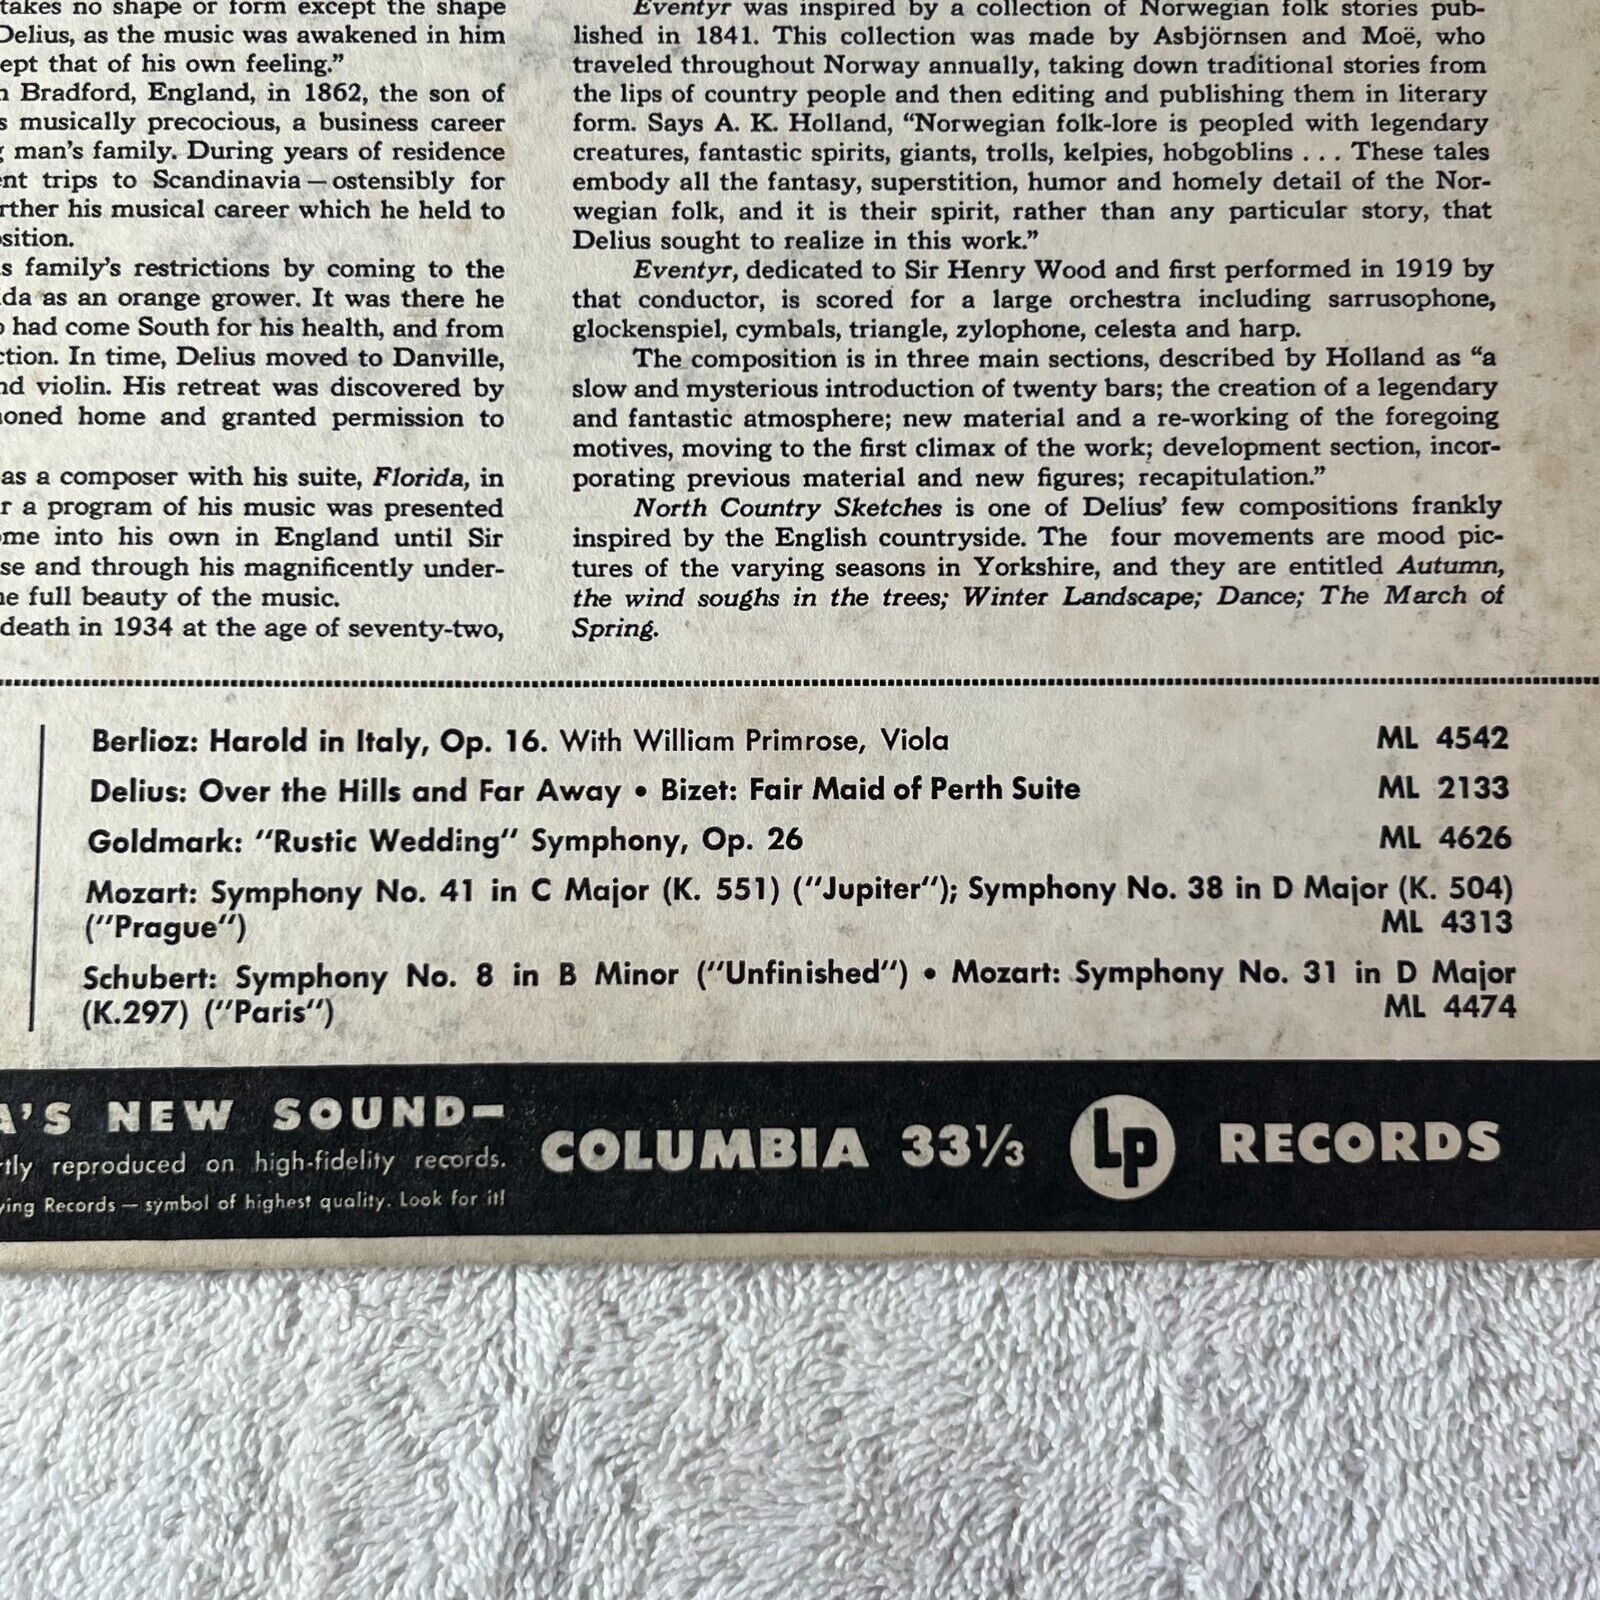 Delius Eventyr & North Country Sketches Vinyl LP Columbia Records